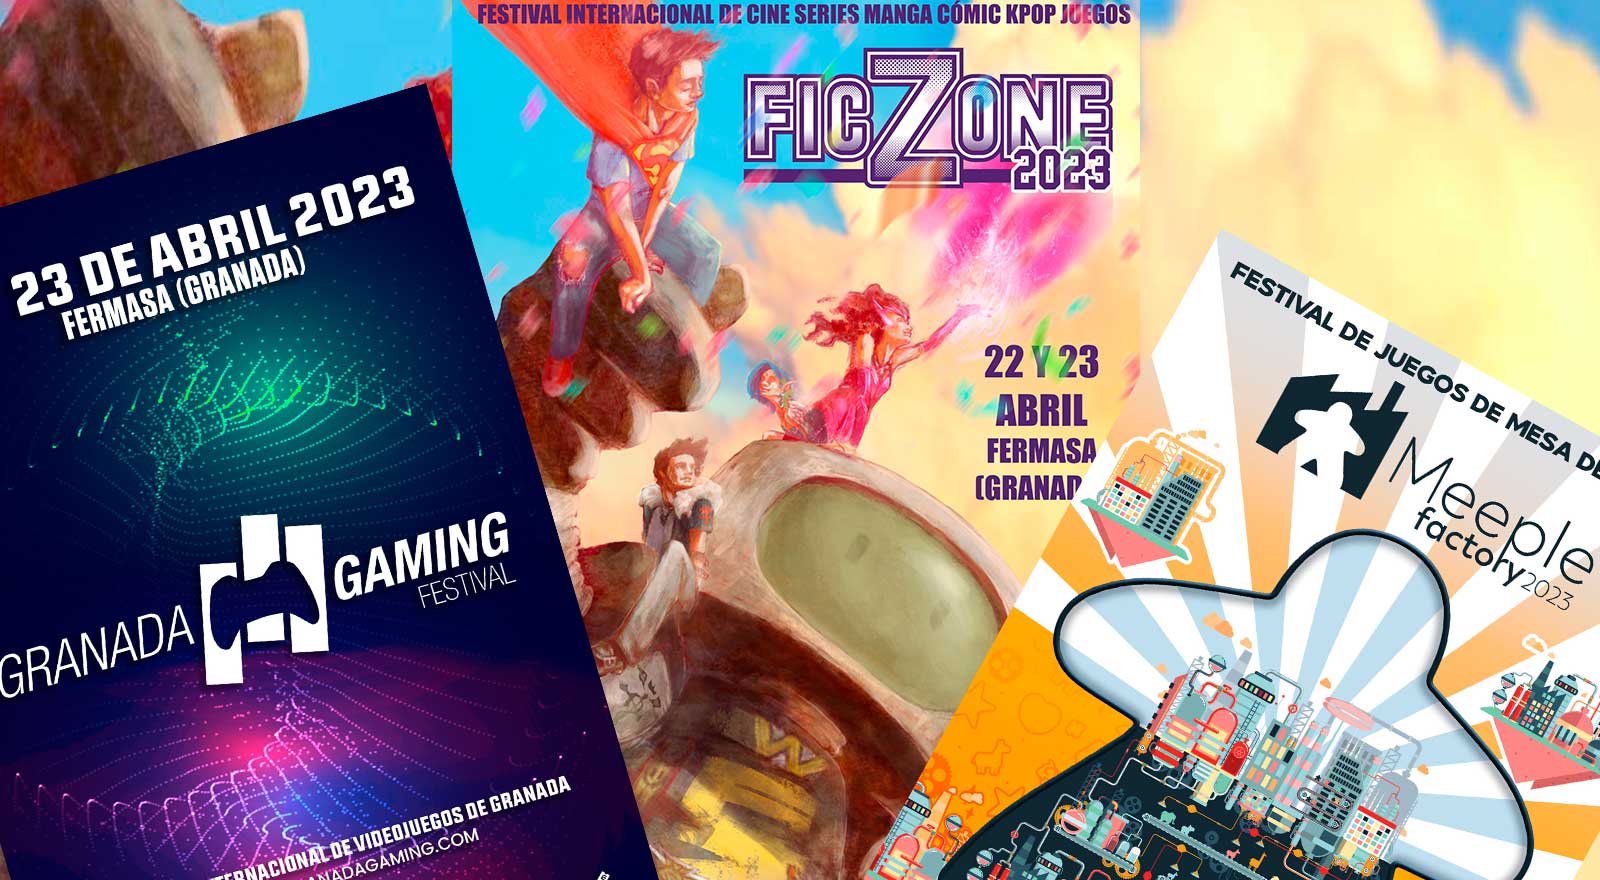 FicZone + Granada Gaming + Meeple Factory 2023